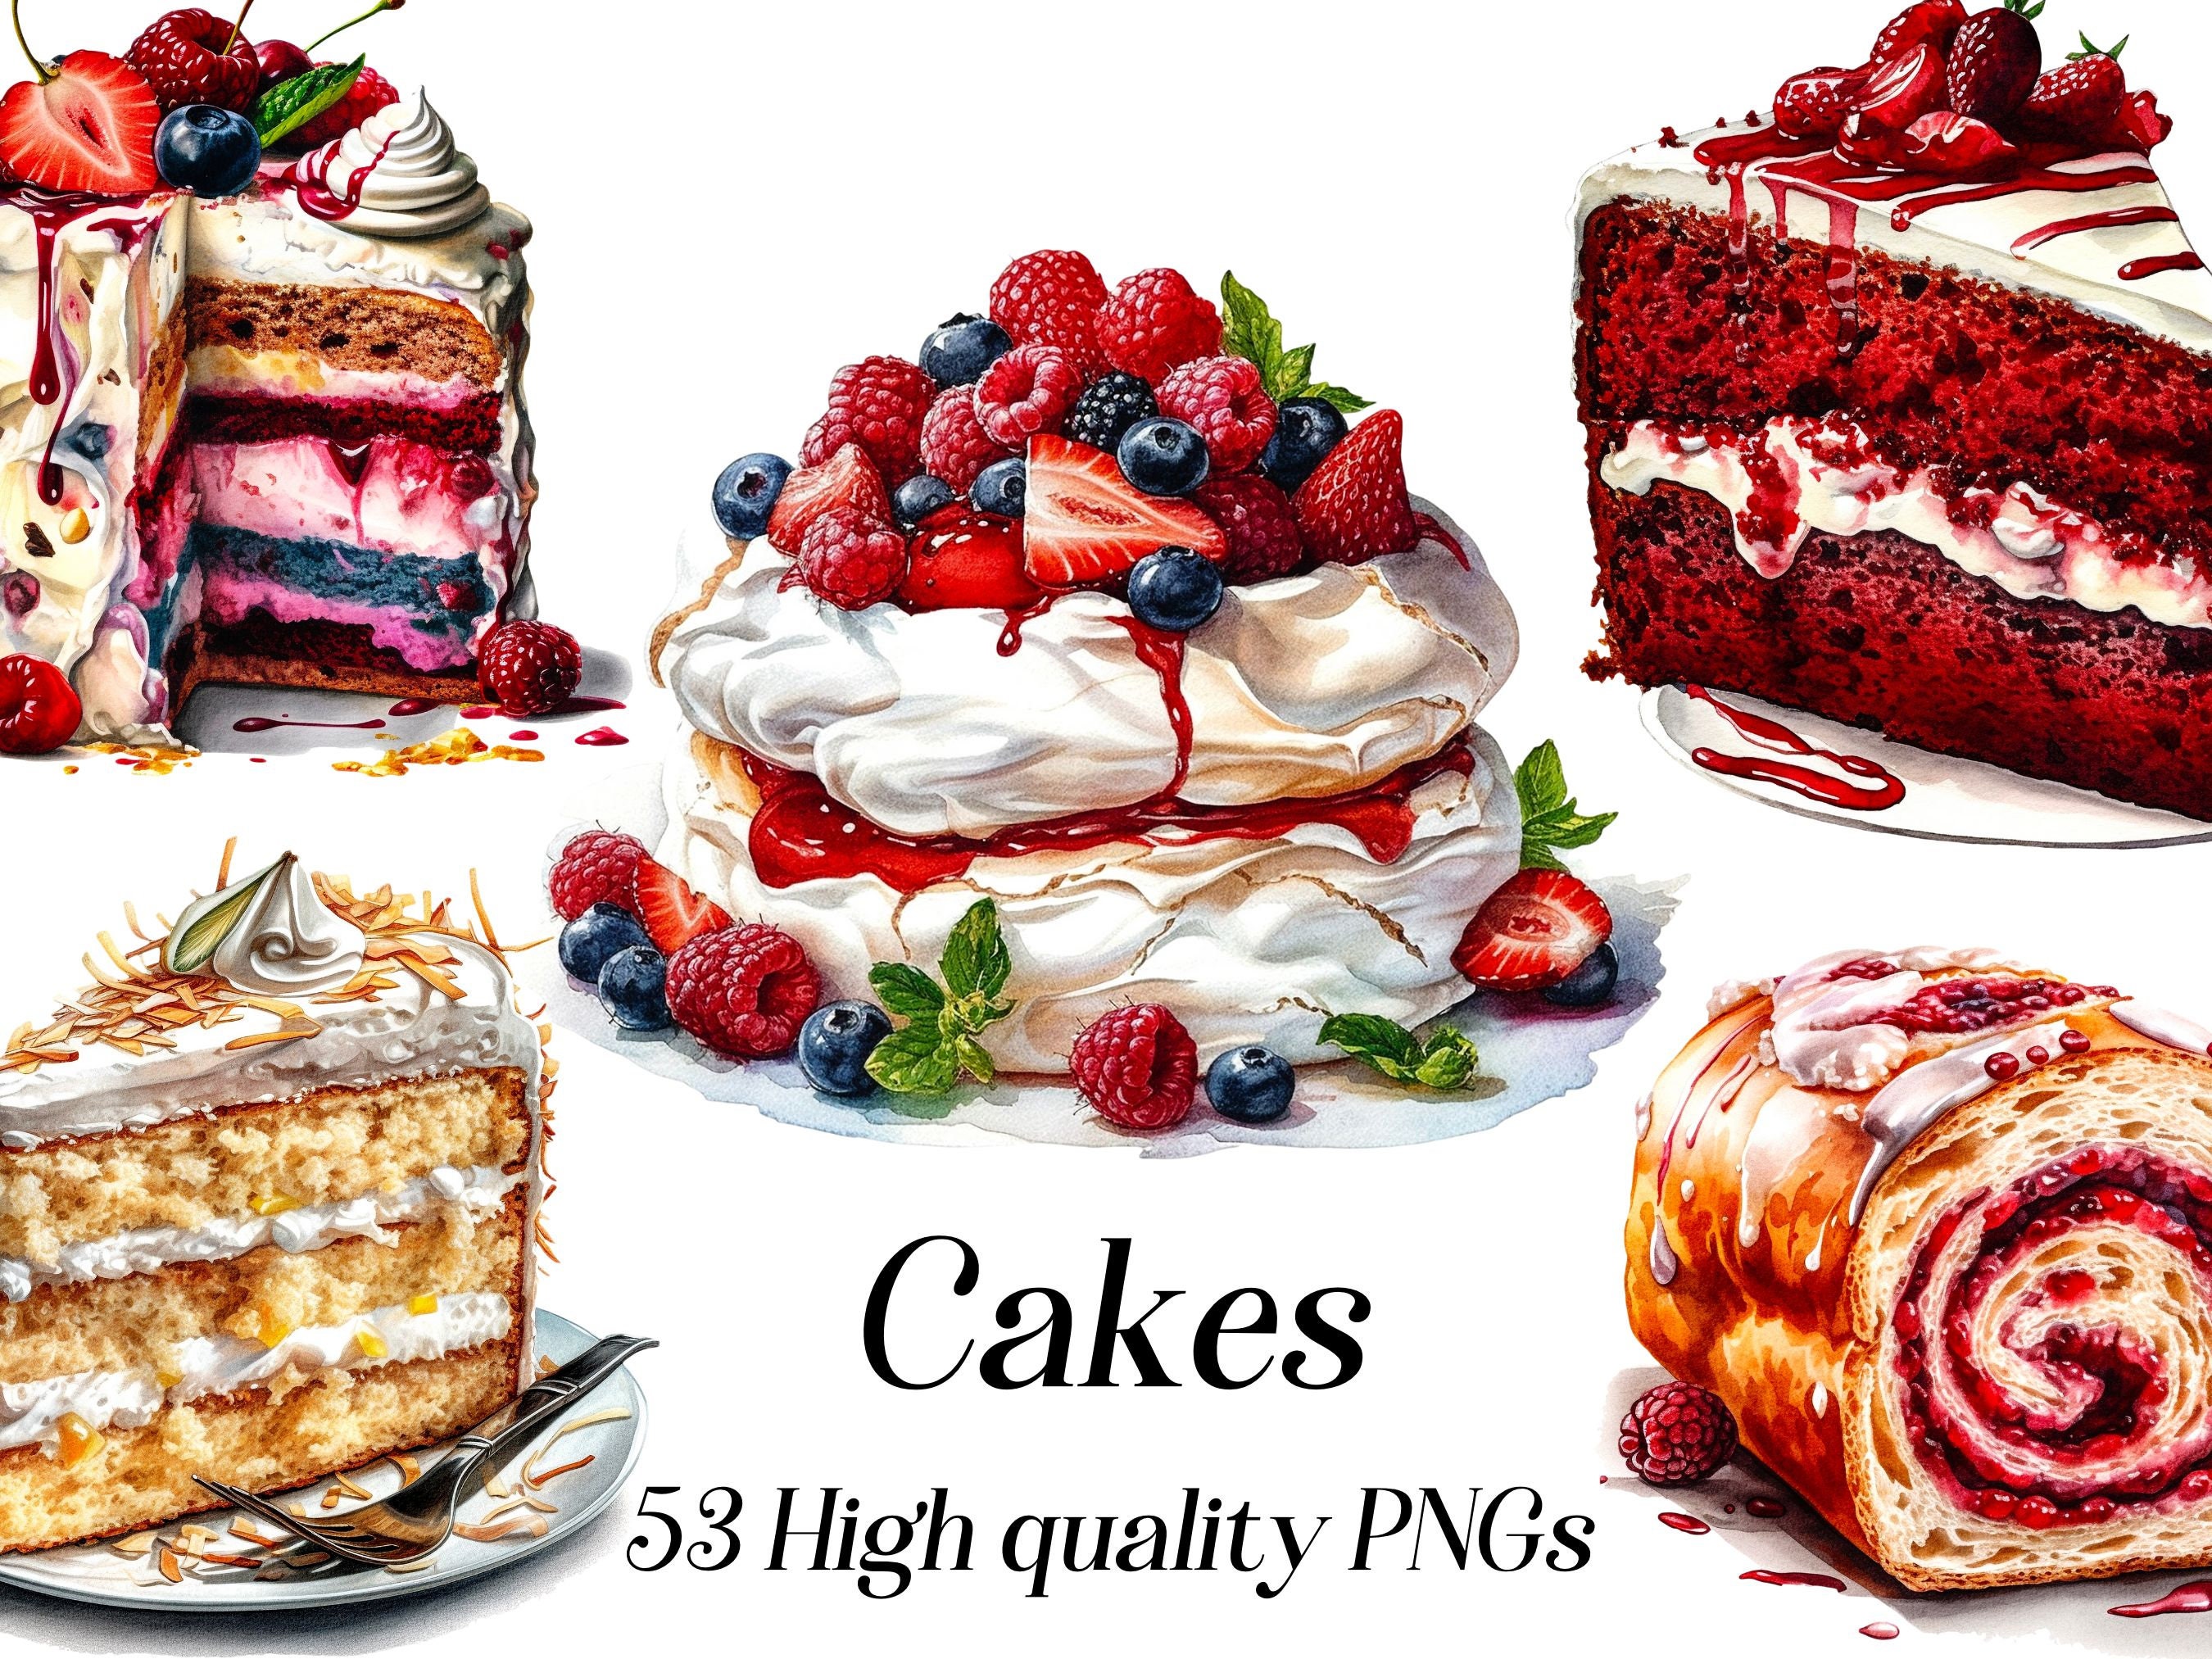 8 Happy Birthday Gift Box Cake Pan Pizza Gelatinas Baking